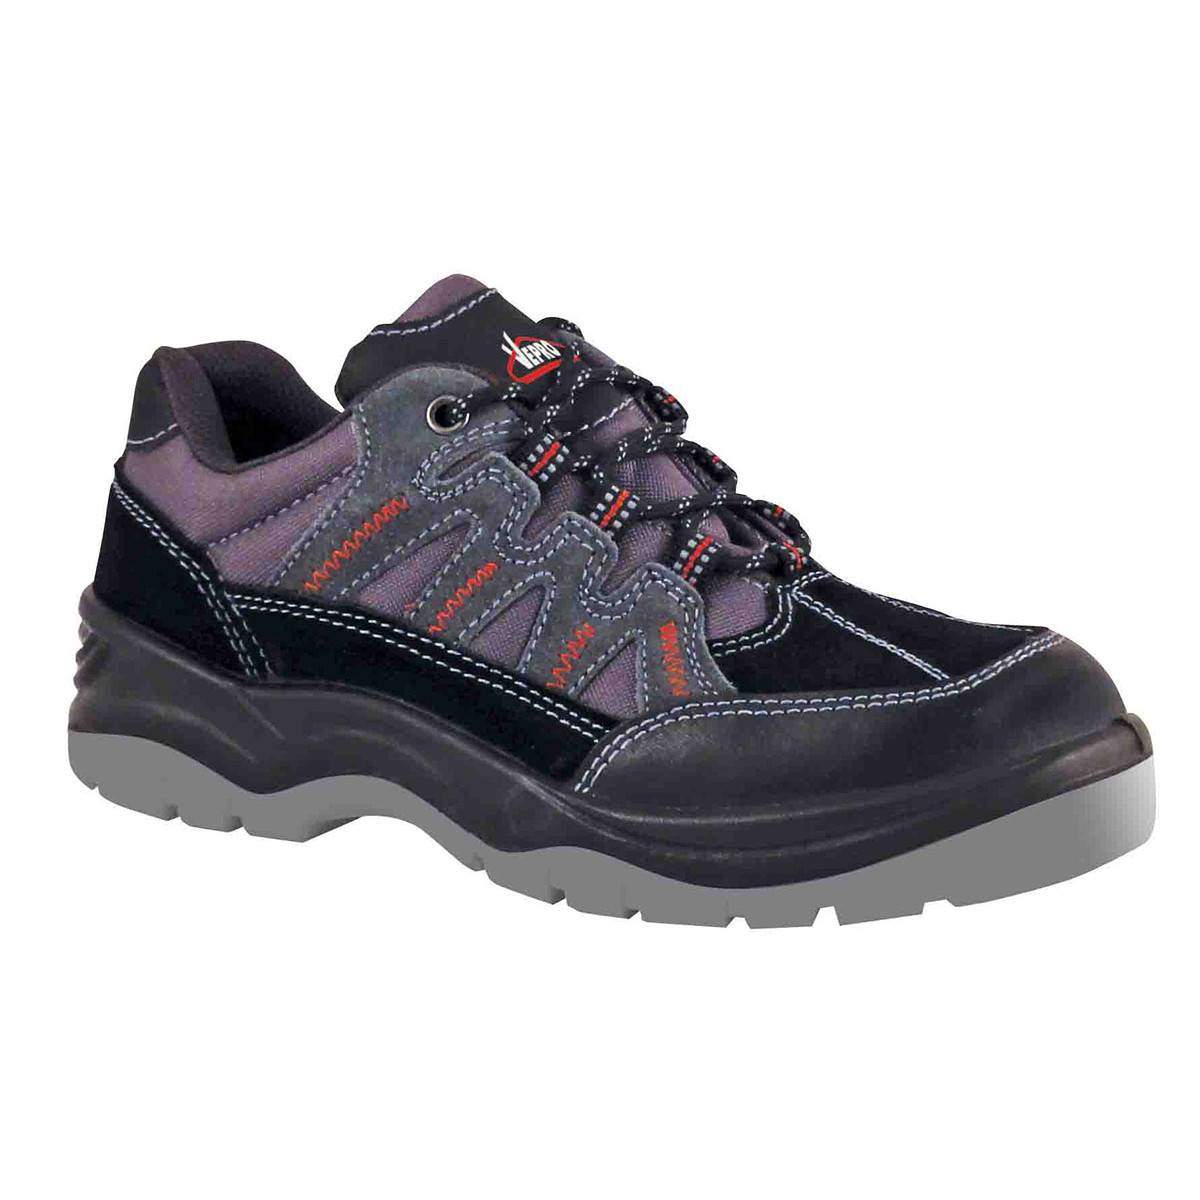 SPA safety shoes size 43, grey-black